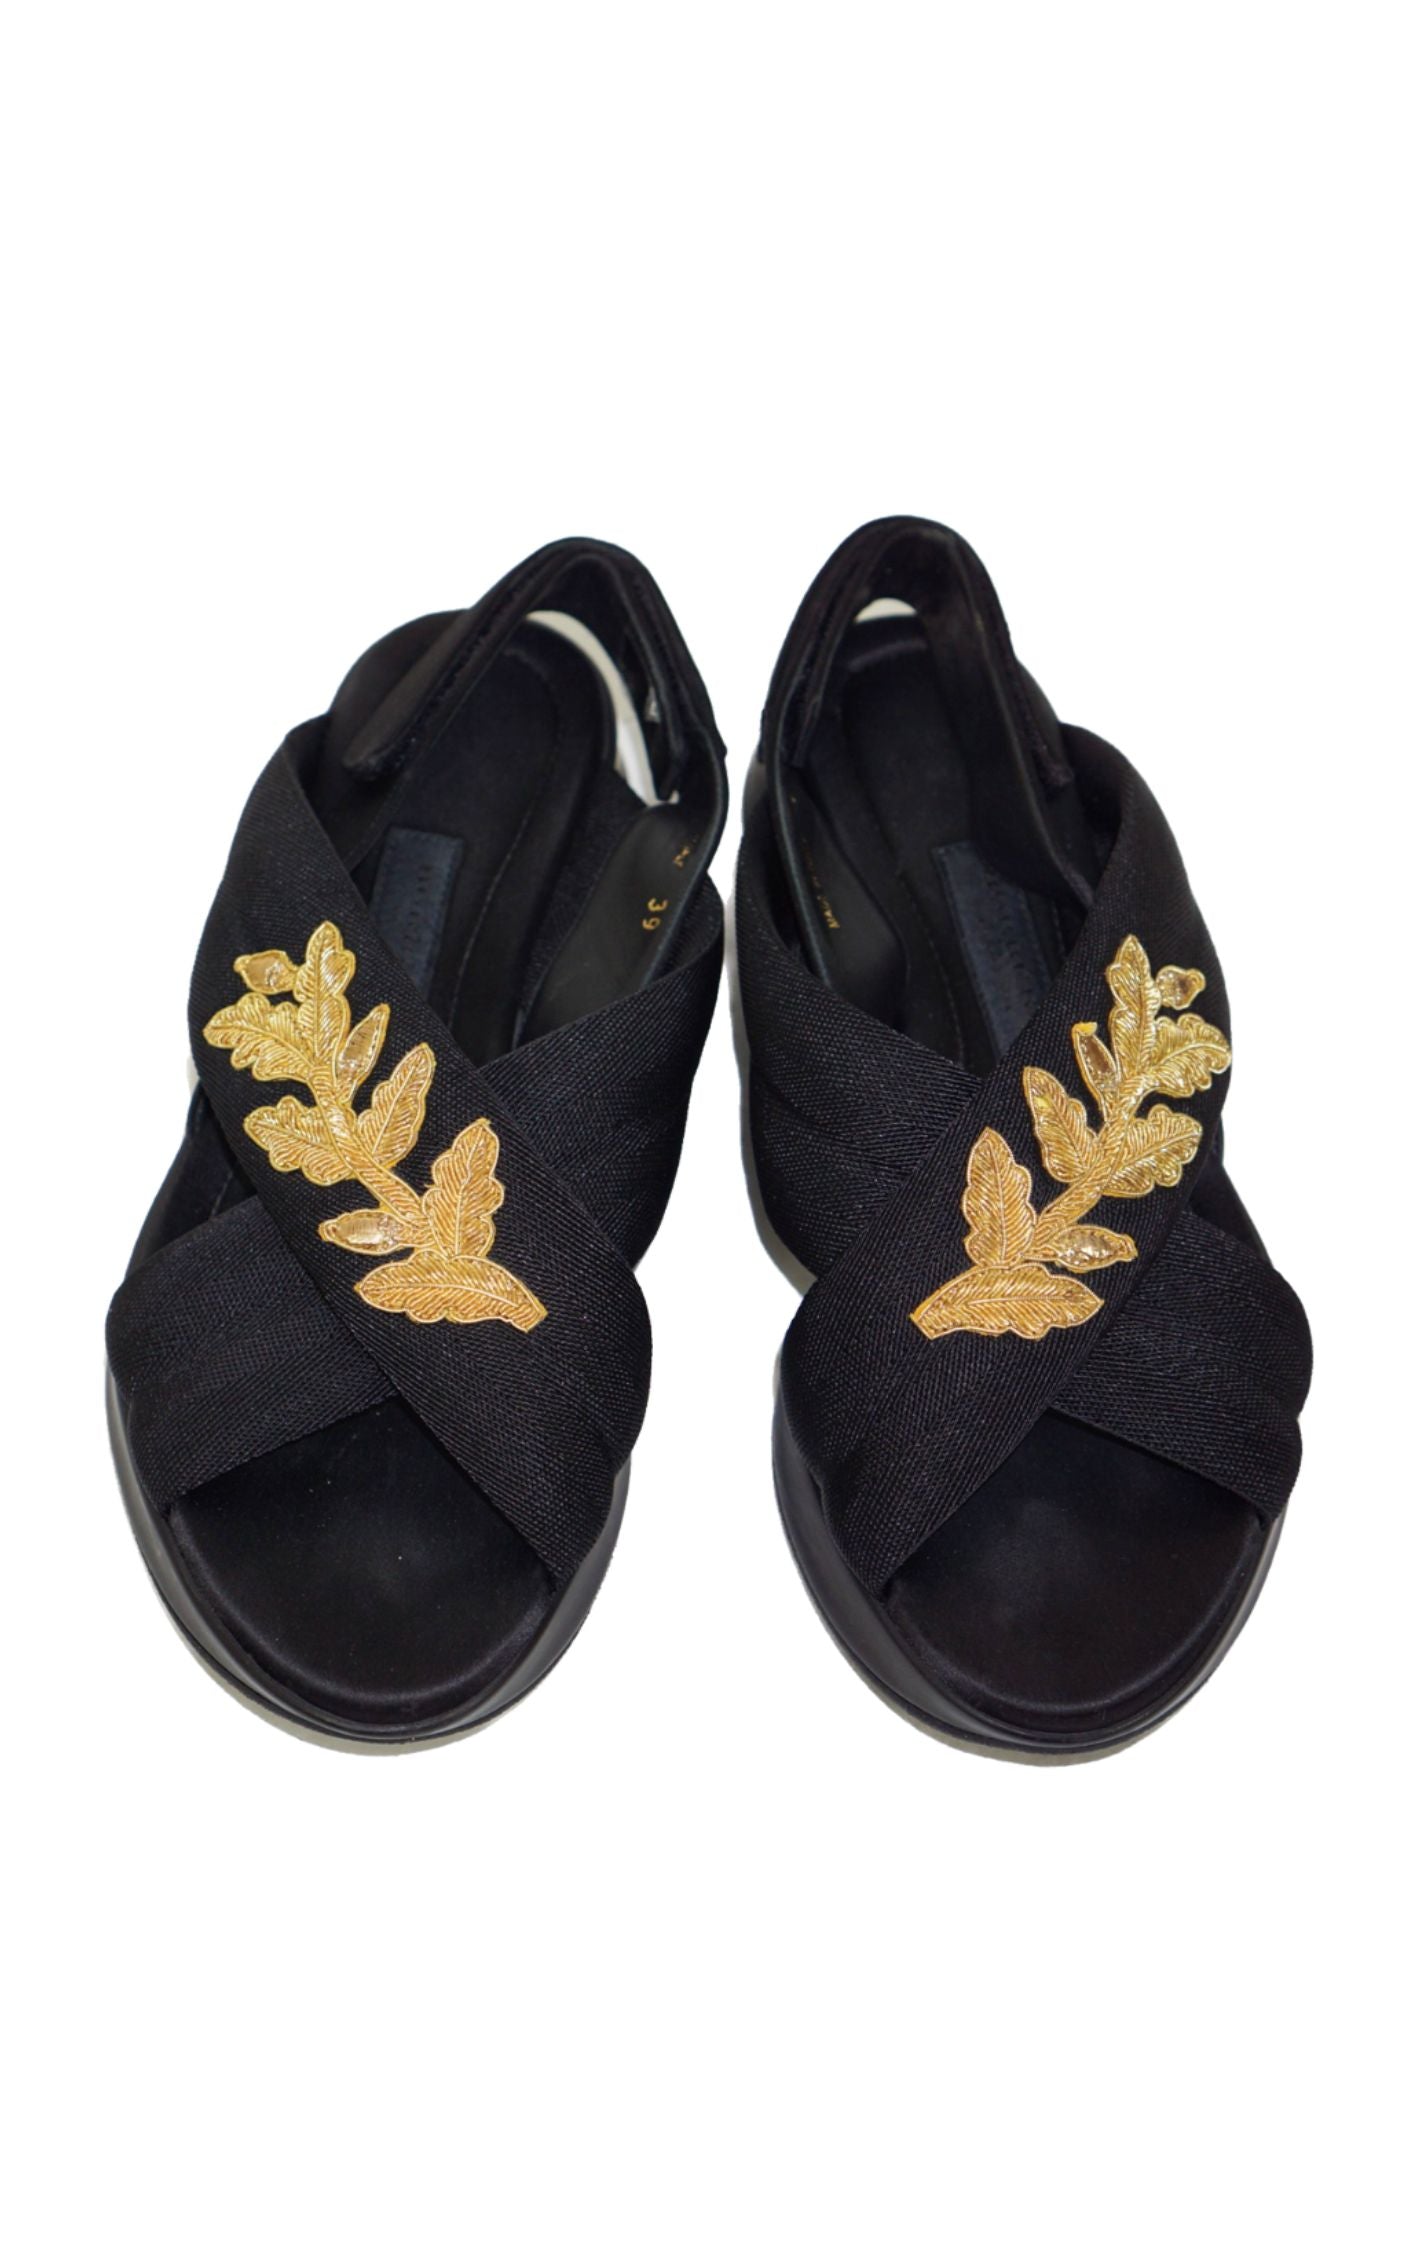 BURBERRY Prorsum Criss Cross Gold Leaf Sandals resellum